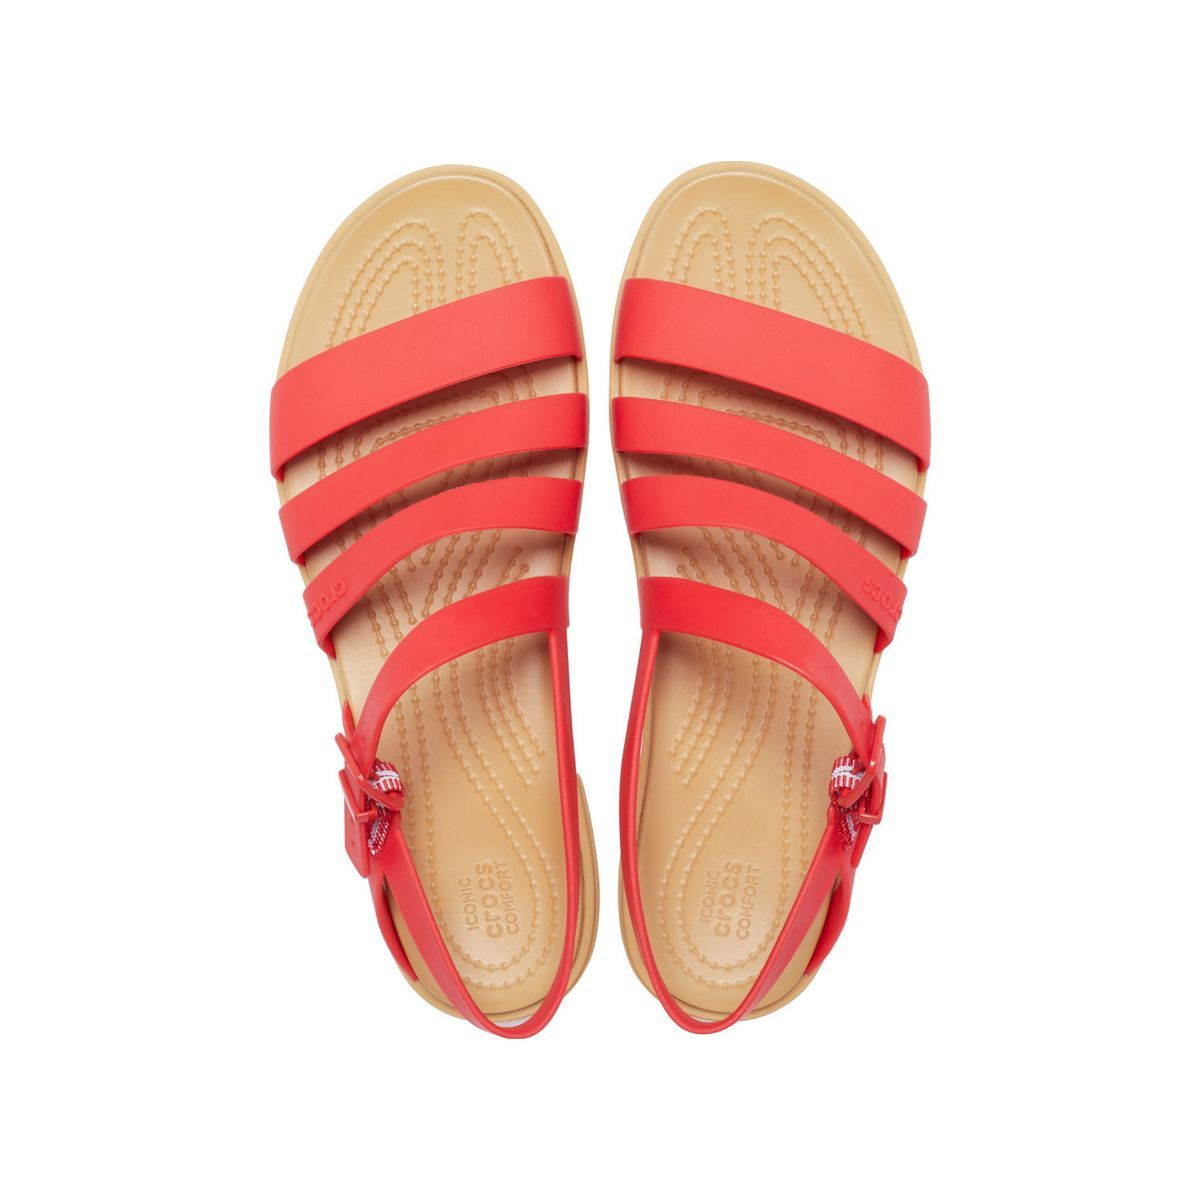 Crocs Tulum Red Women Sandal - 206107-8c1 -: Buy Crocs Tulum Red Women ...